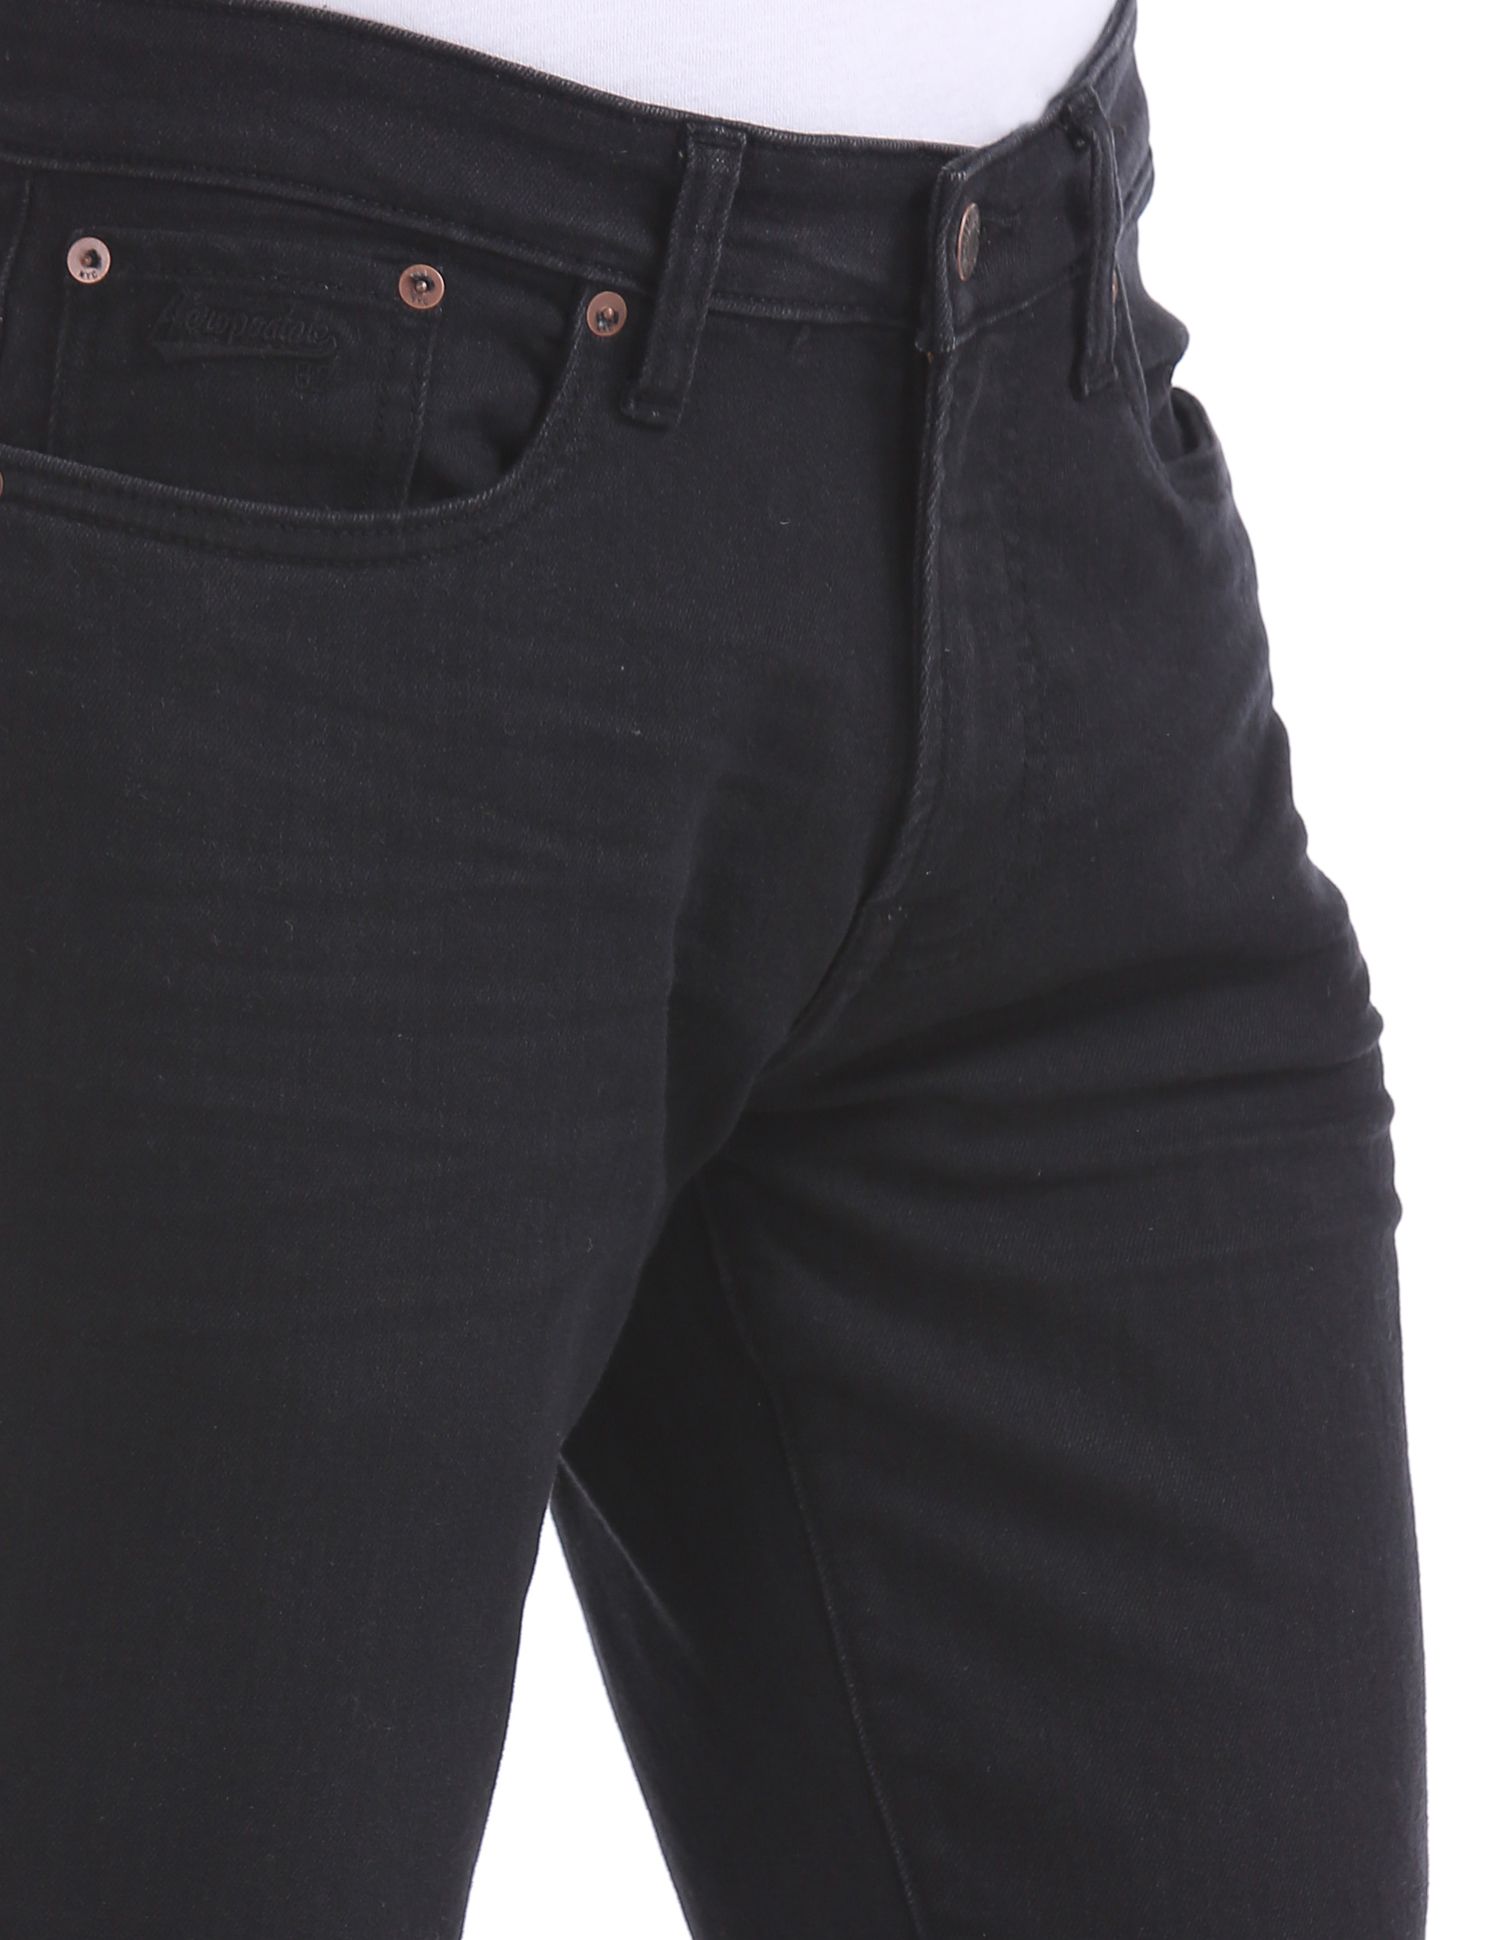 Aeropostale Black Skinny Jeans - Buy Aeropostale Black Skinny Jeans ...